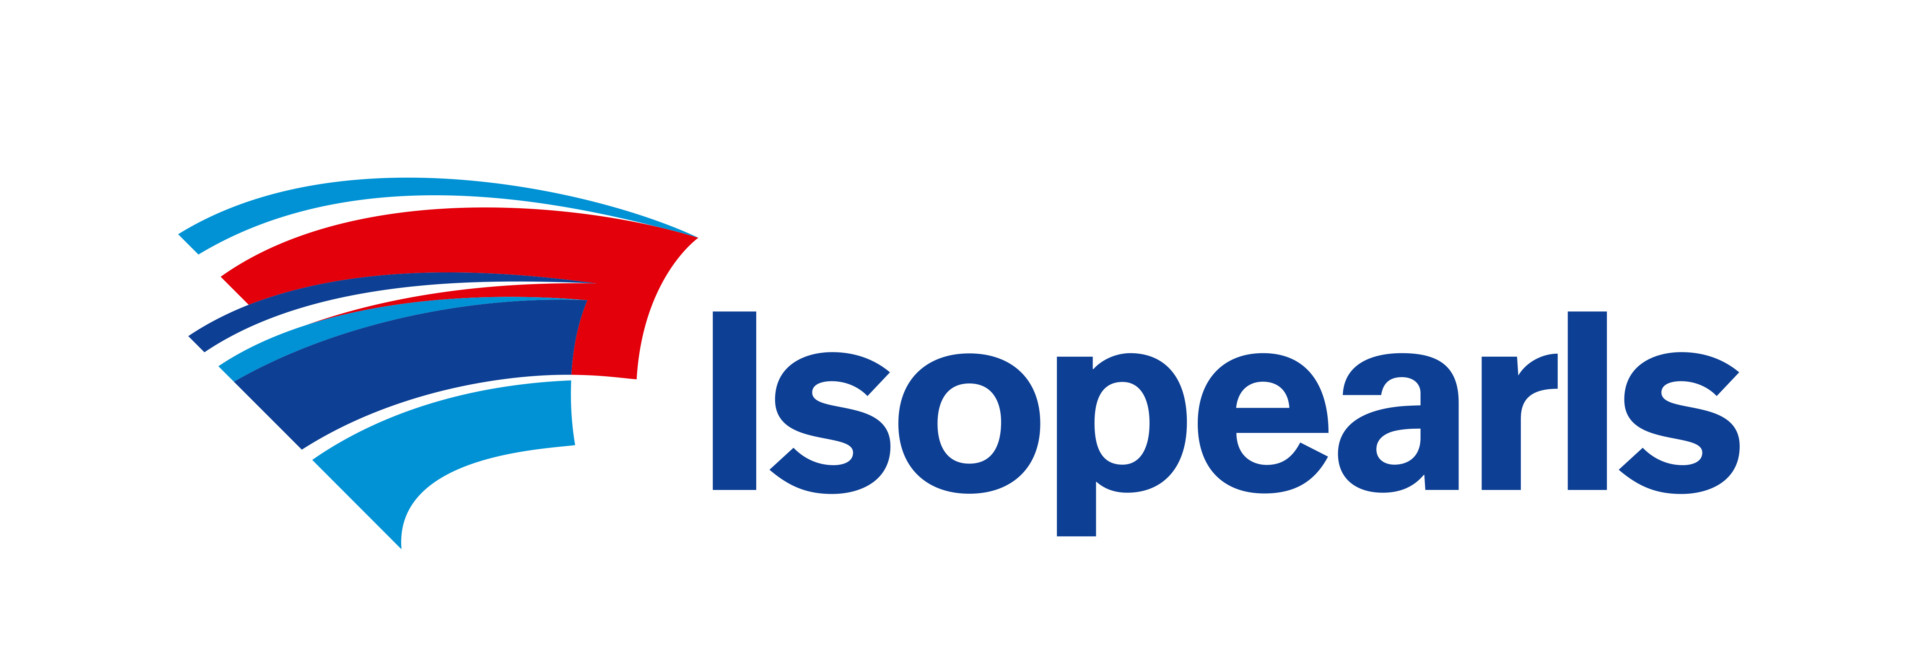 Isopearls_logo_opbouw_cmyk